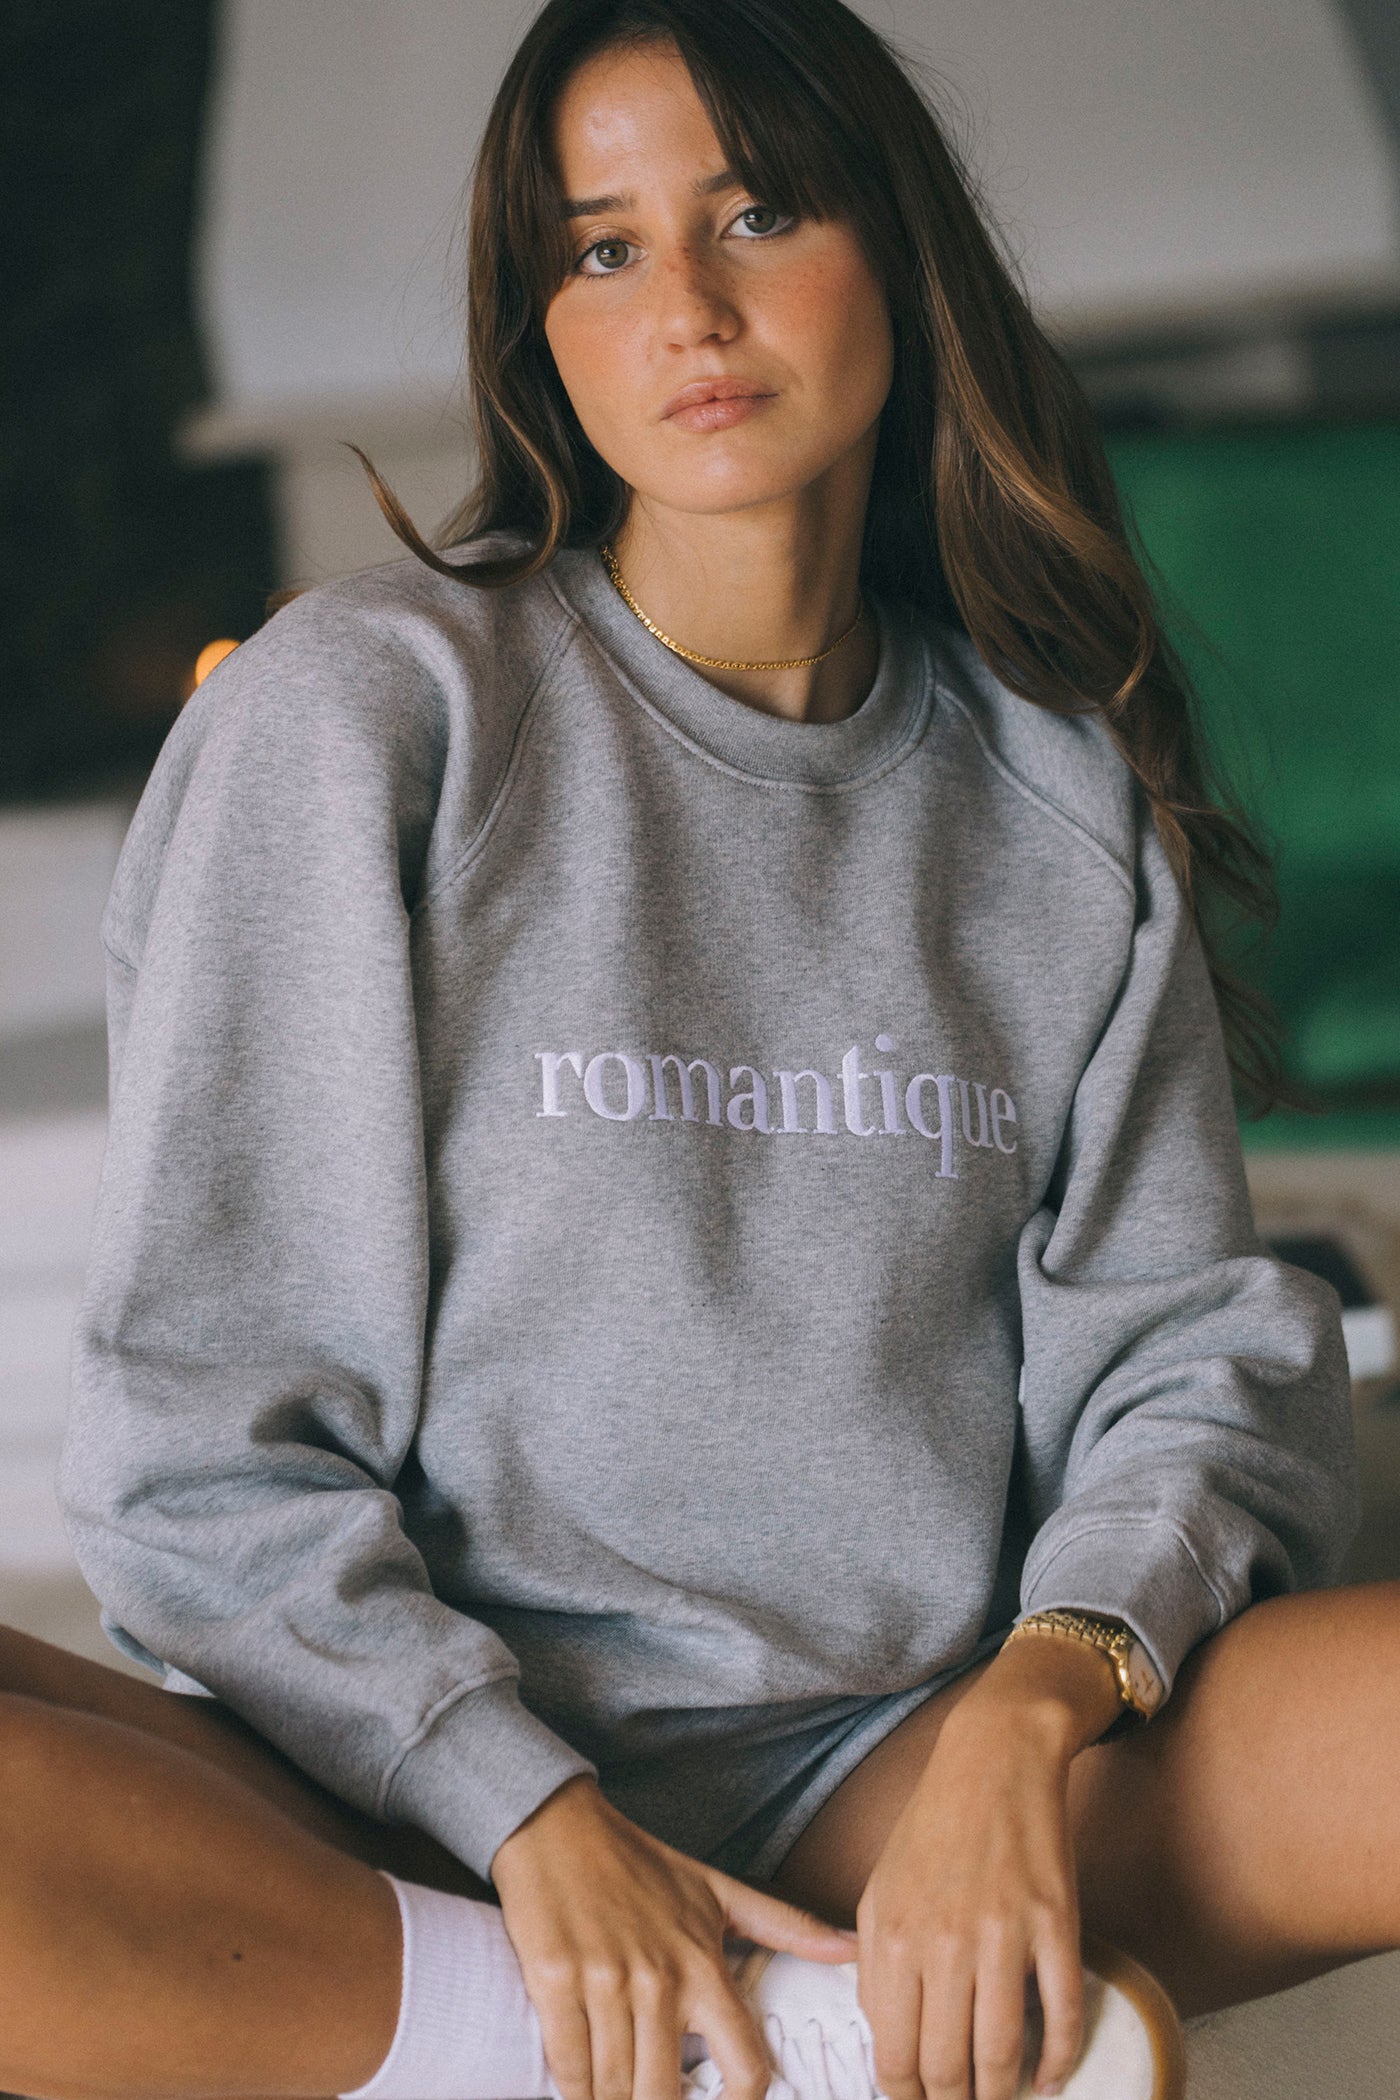 Romantique Sweatshirt